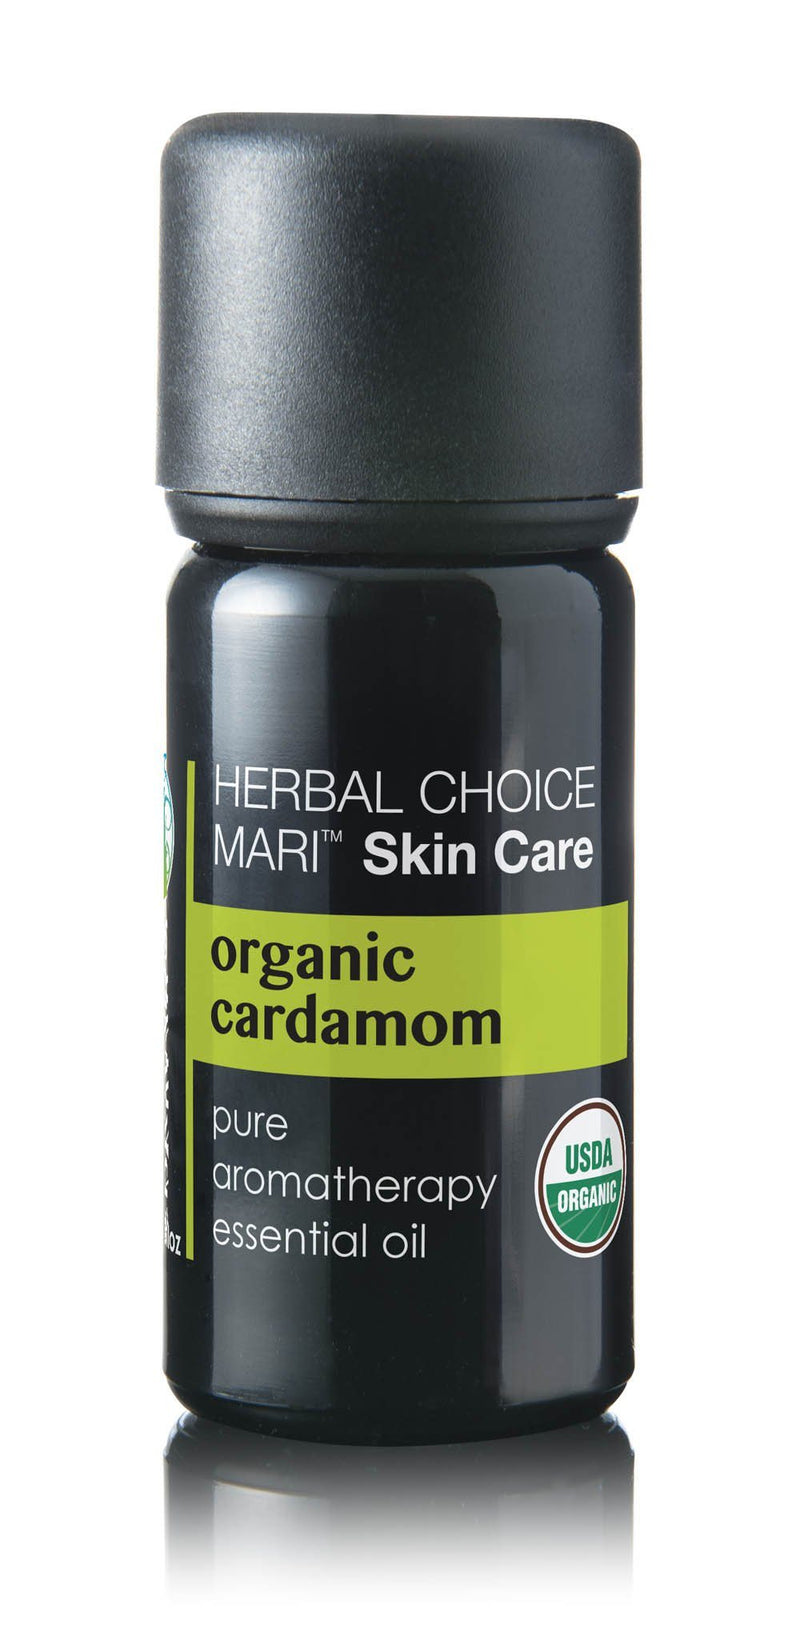 Herbal Choice Mari Organic Cardamom Essential Oil 0 3floz Glass